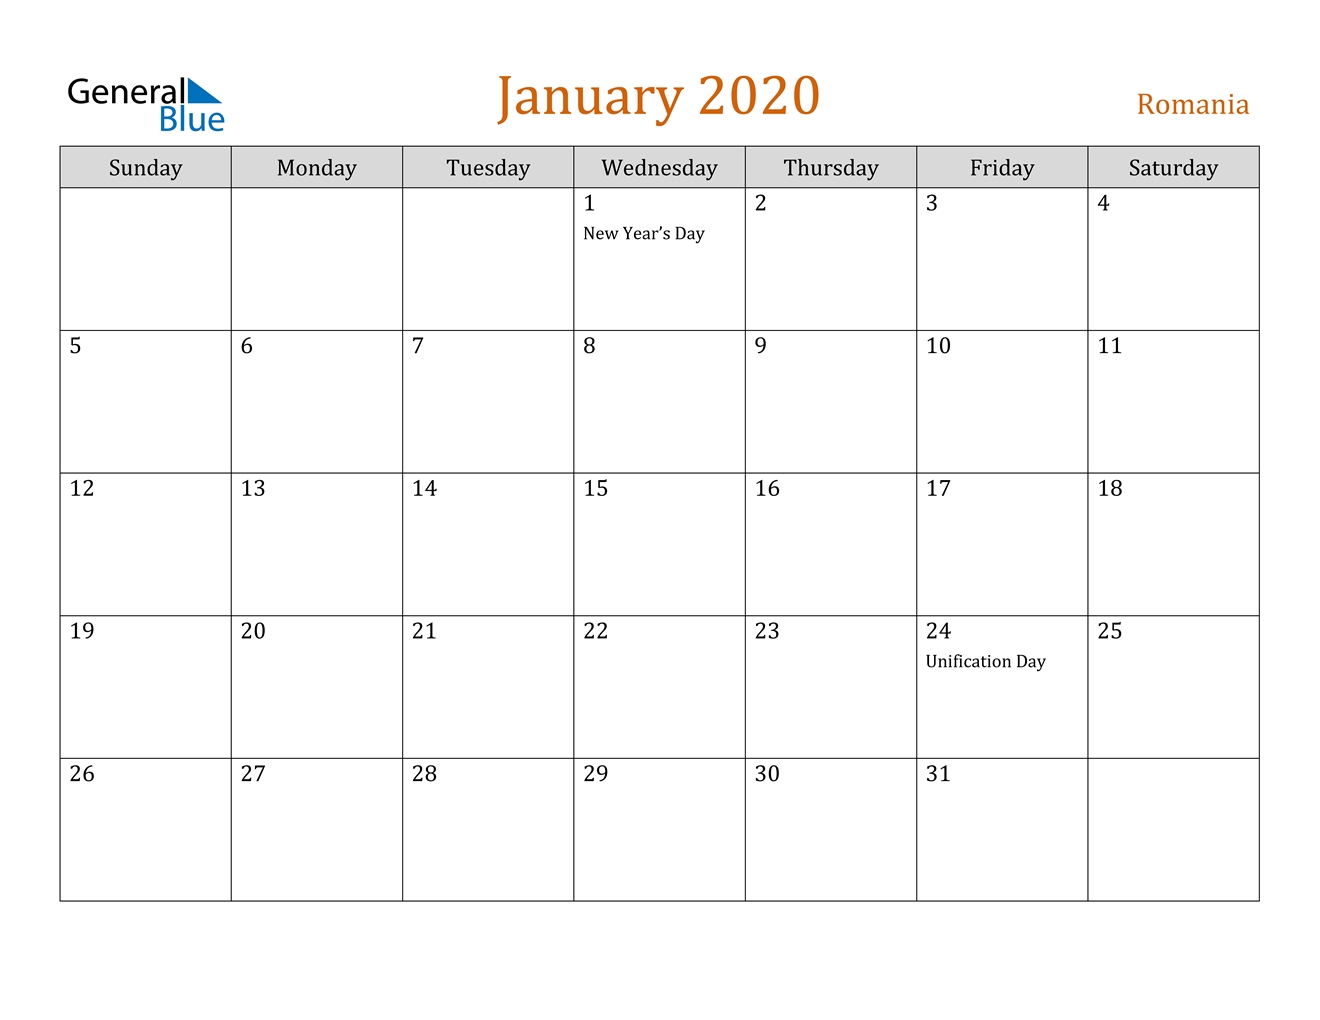 January 2020 Calendar - Romania